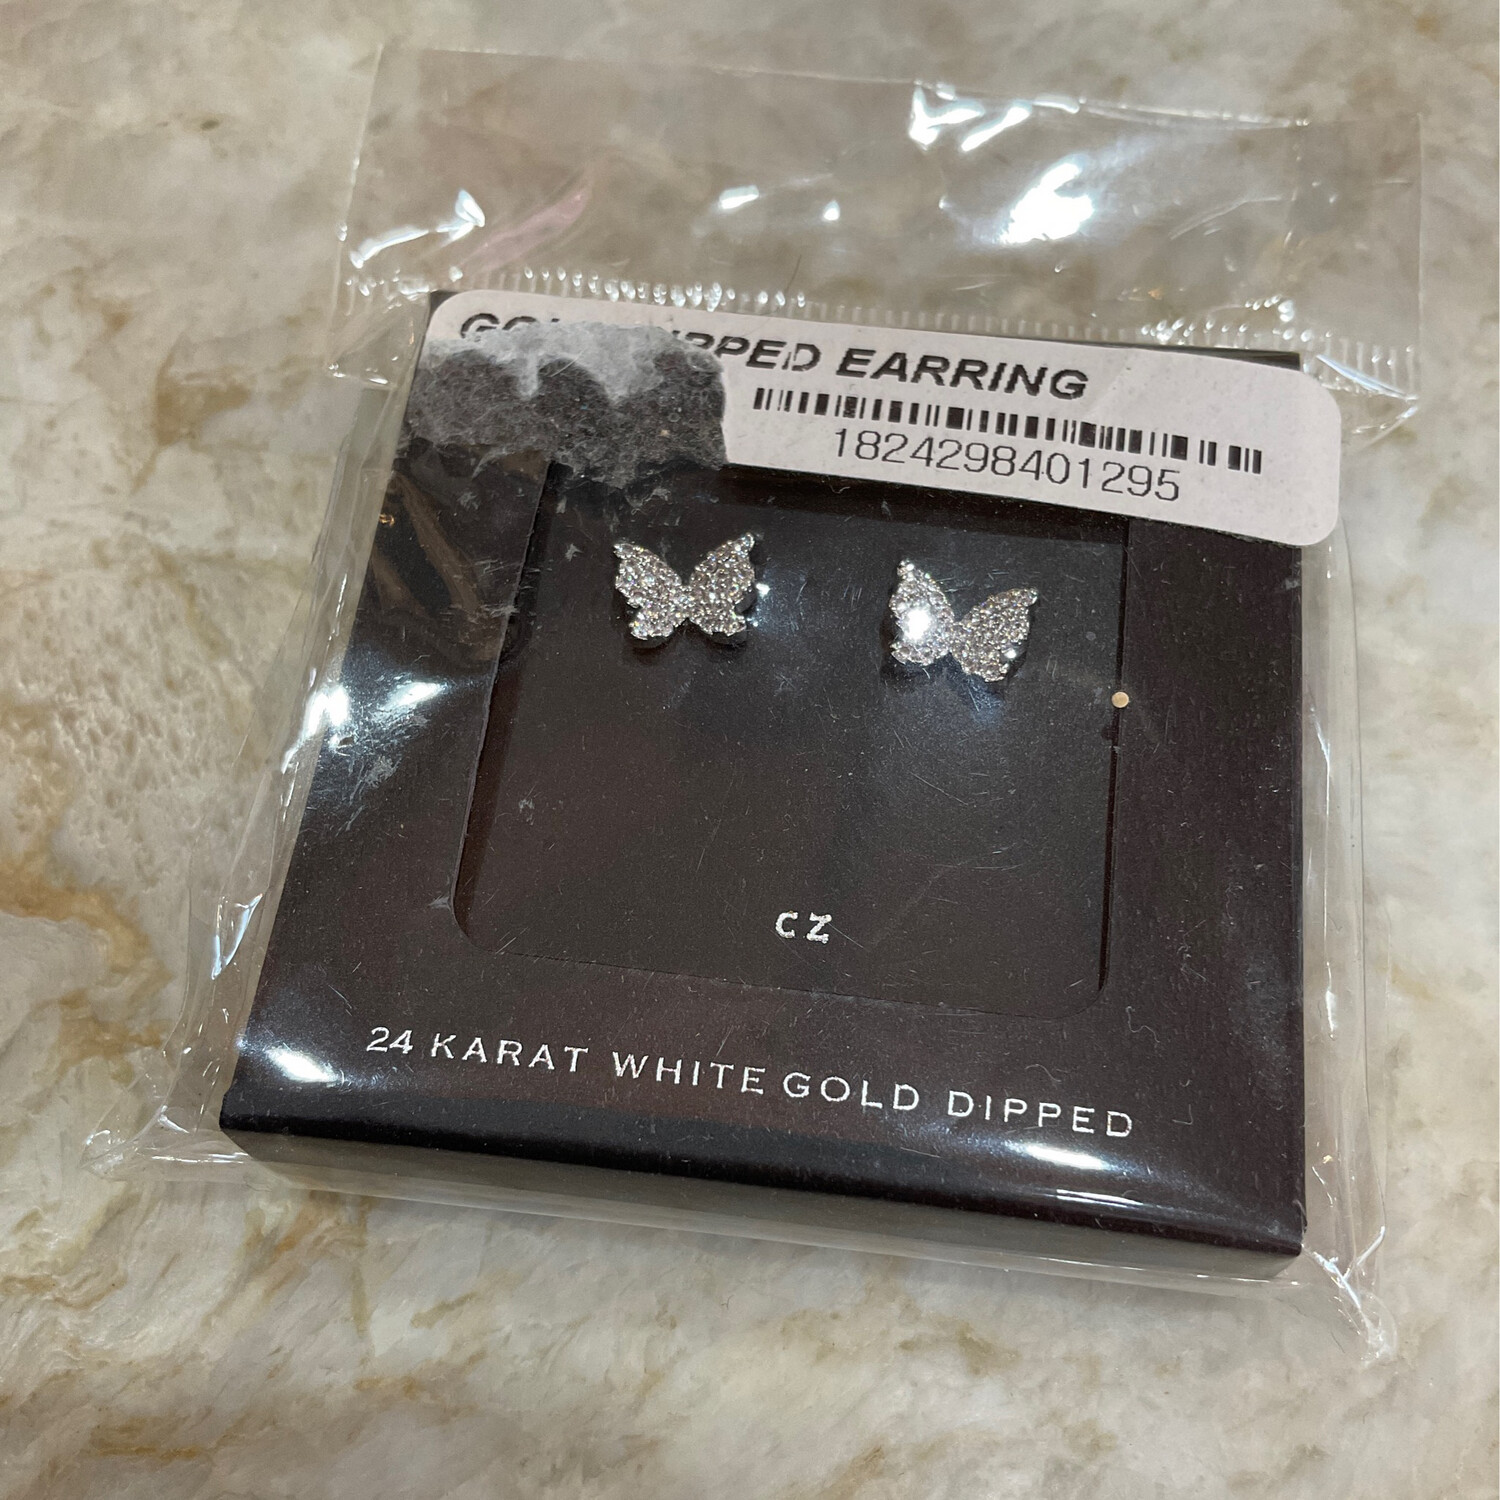 Zunic SB-18242 WG White Gold Dipped Butterfly Earrings 